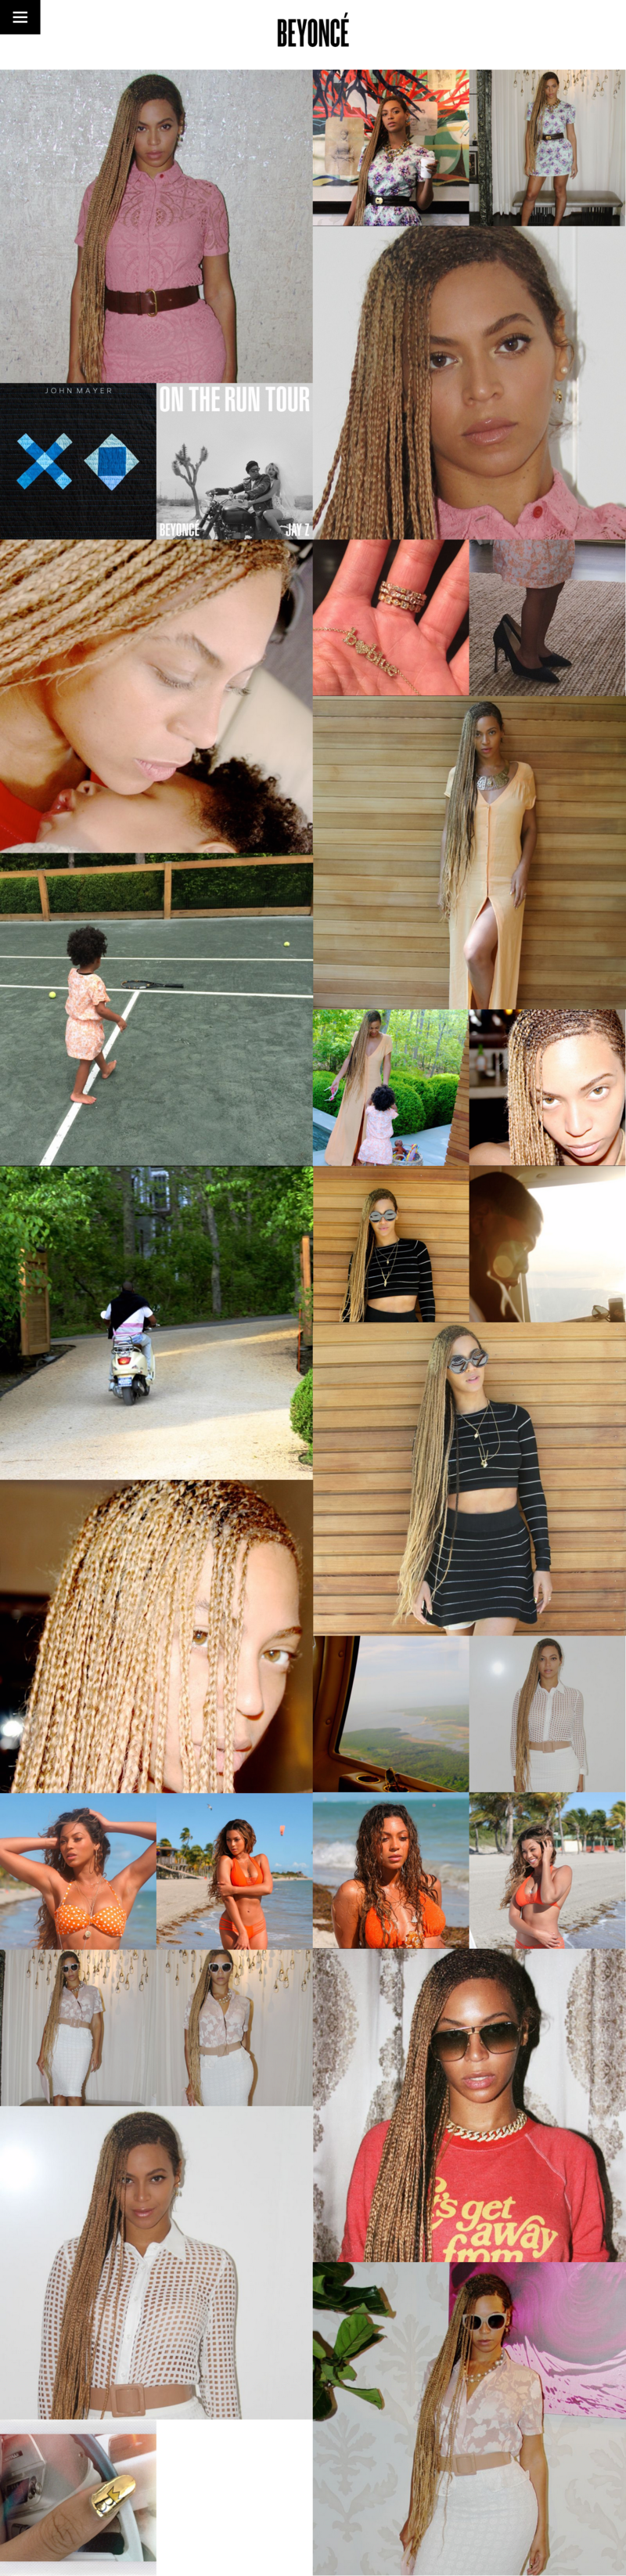 Homepage of Beyonce - home